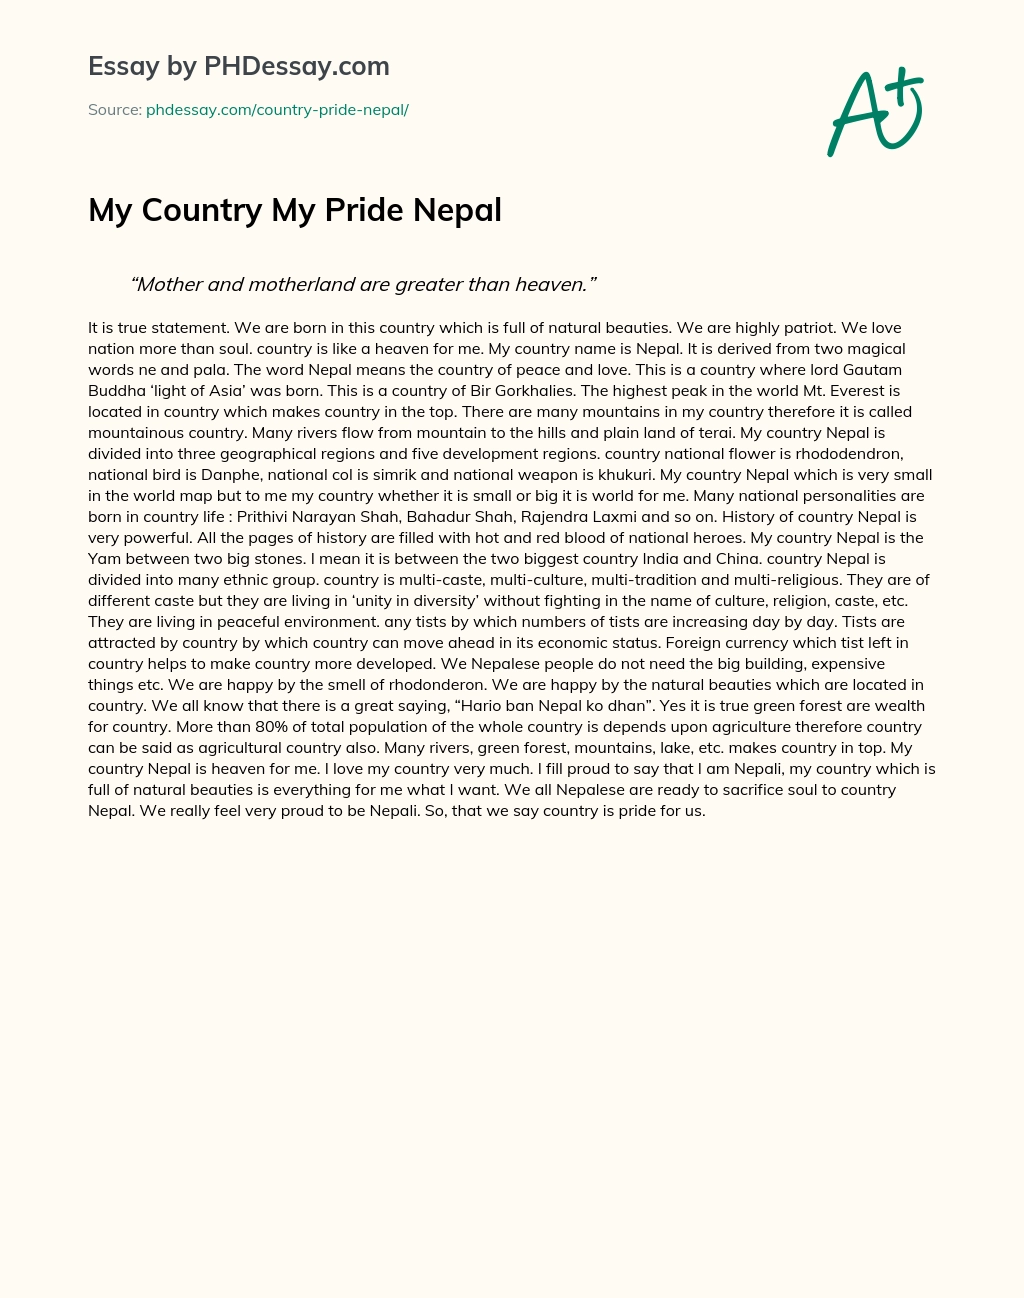 My Country My Pride Nepal essay